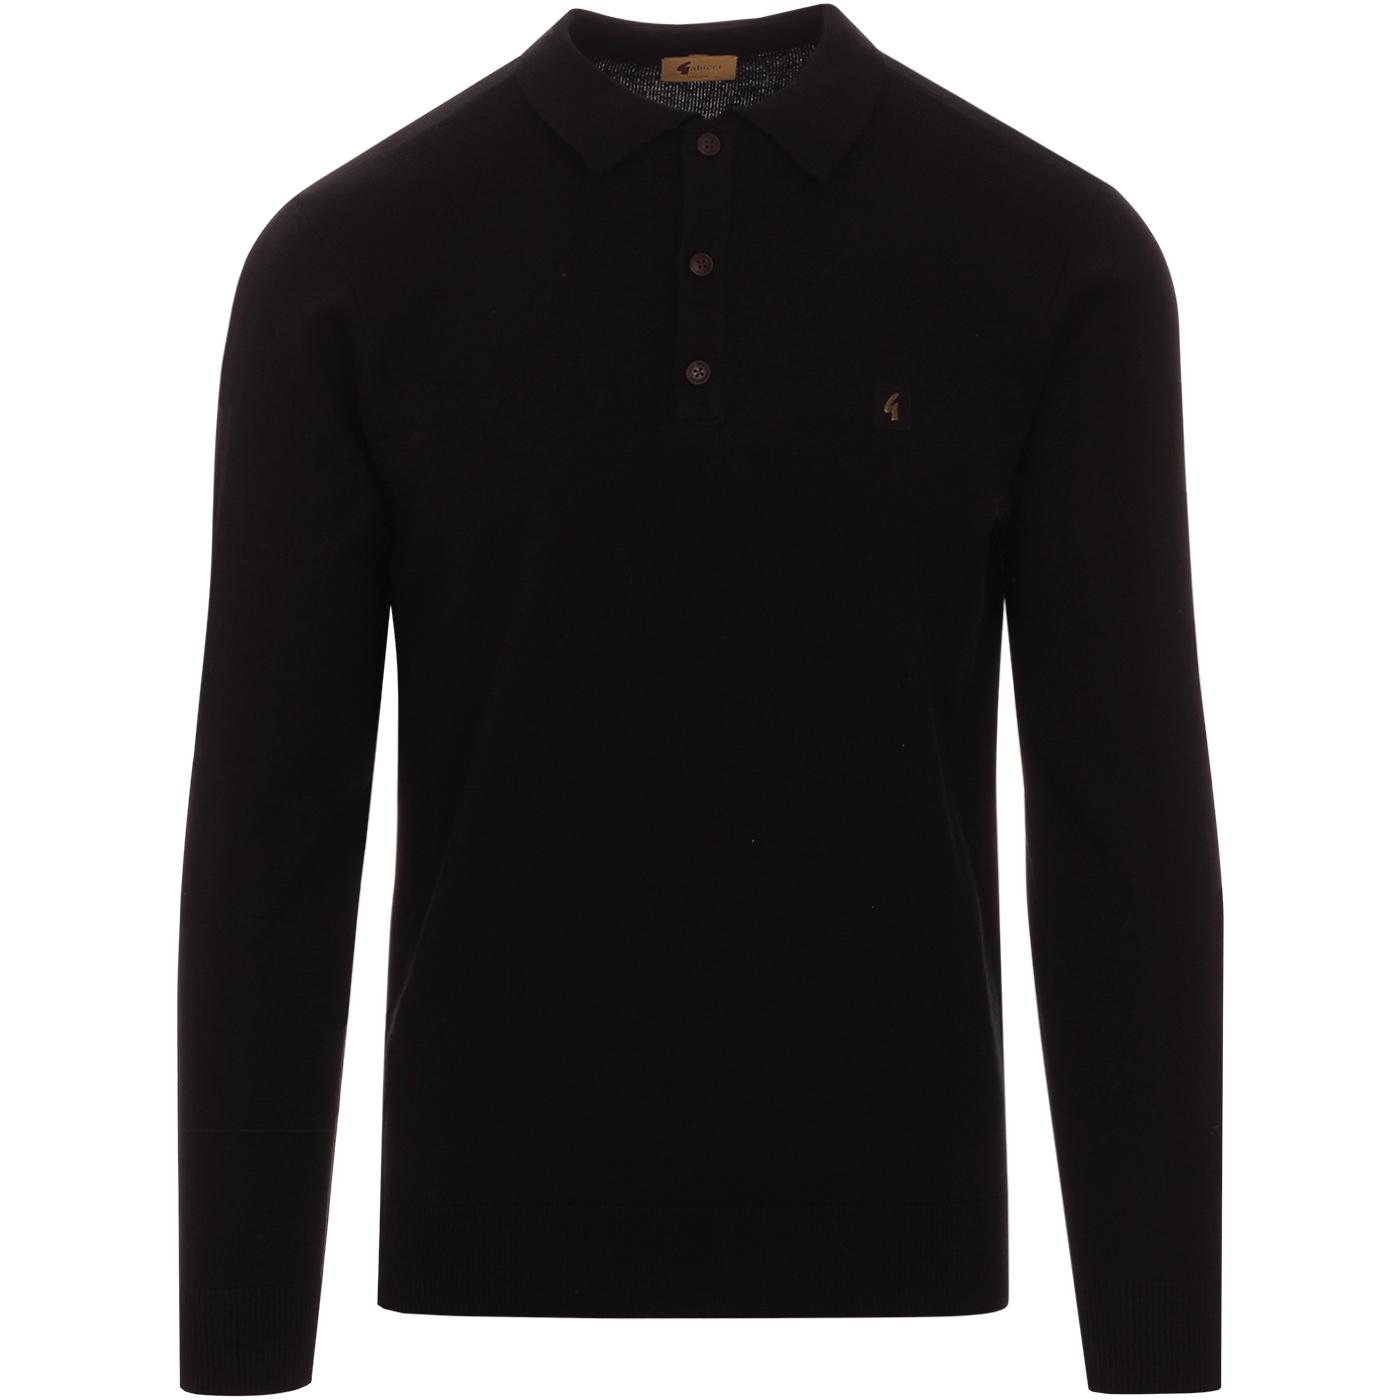 GABICCI VINTAGE Francesco Retro Mod Knit Polo Shirt Black